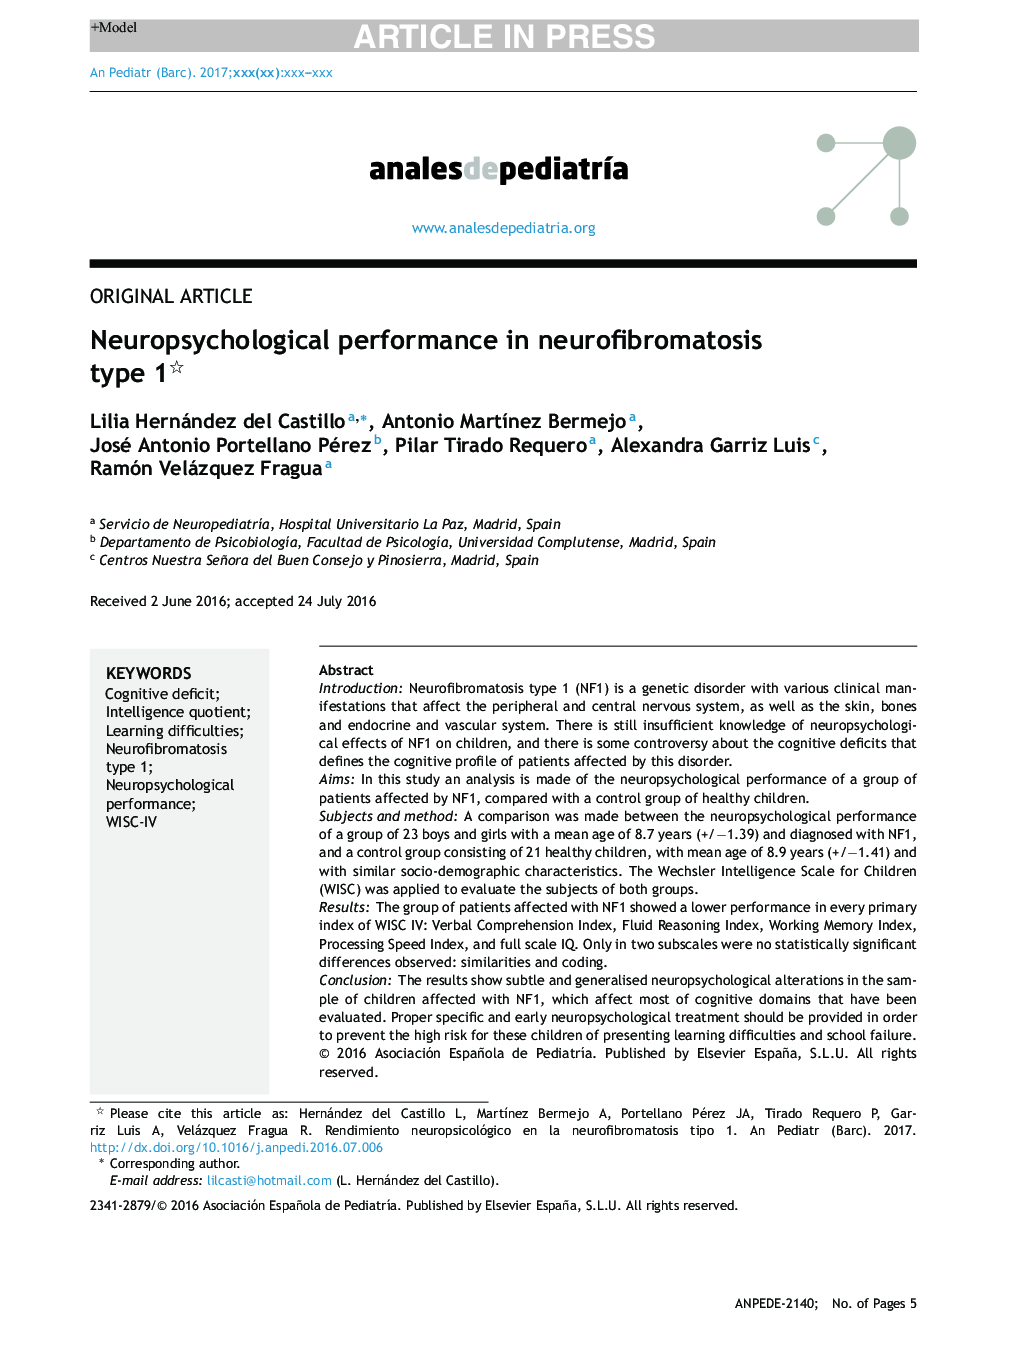 Neuropsychological performance in neurofibromatosis type 1